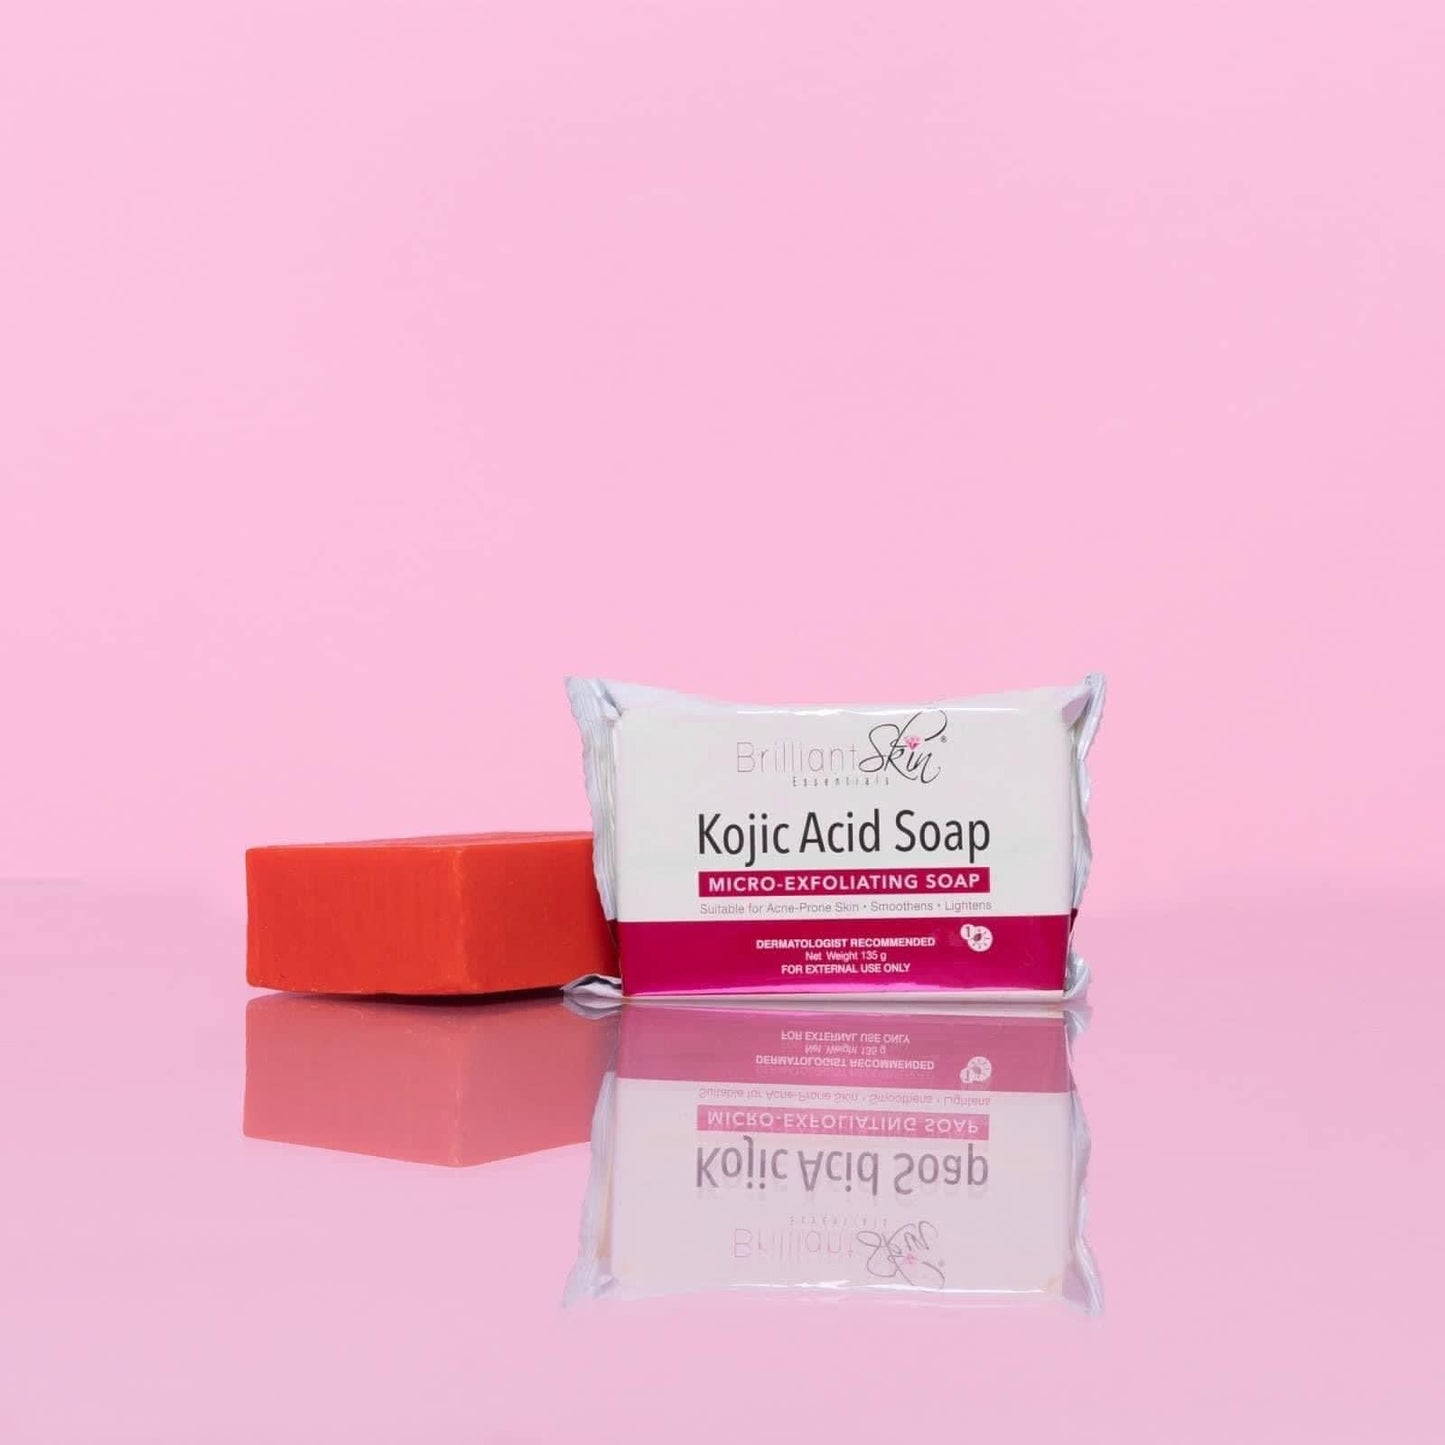 Brilliant Skin Essentials- Kojic Acid Soap-135g ( Micro Exfoliating Soap)